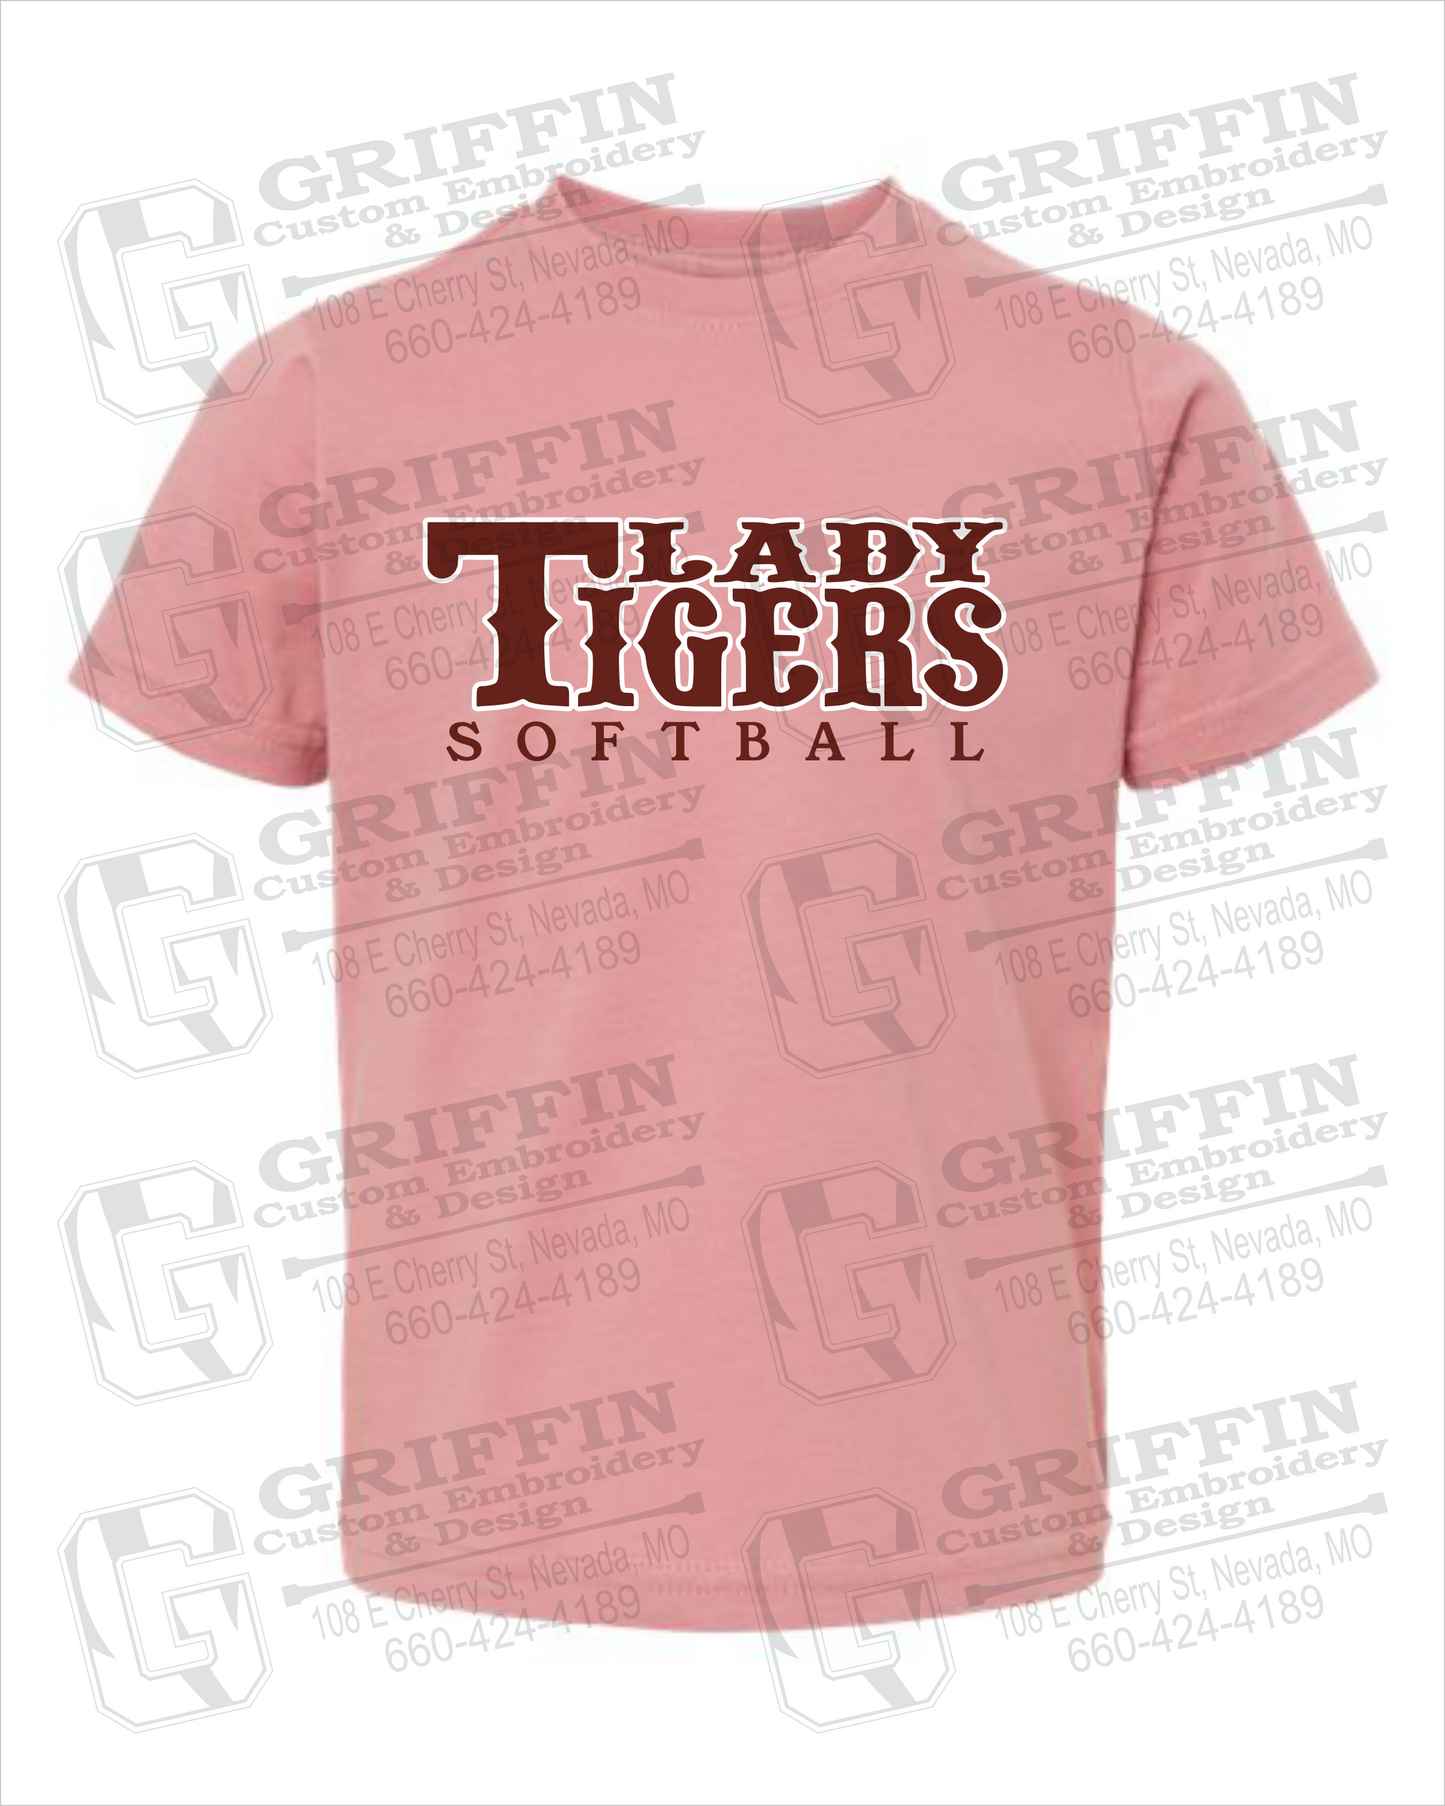 Nevada Tigers 24-F Toddler/Infant T-Shirt - Softball